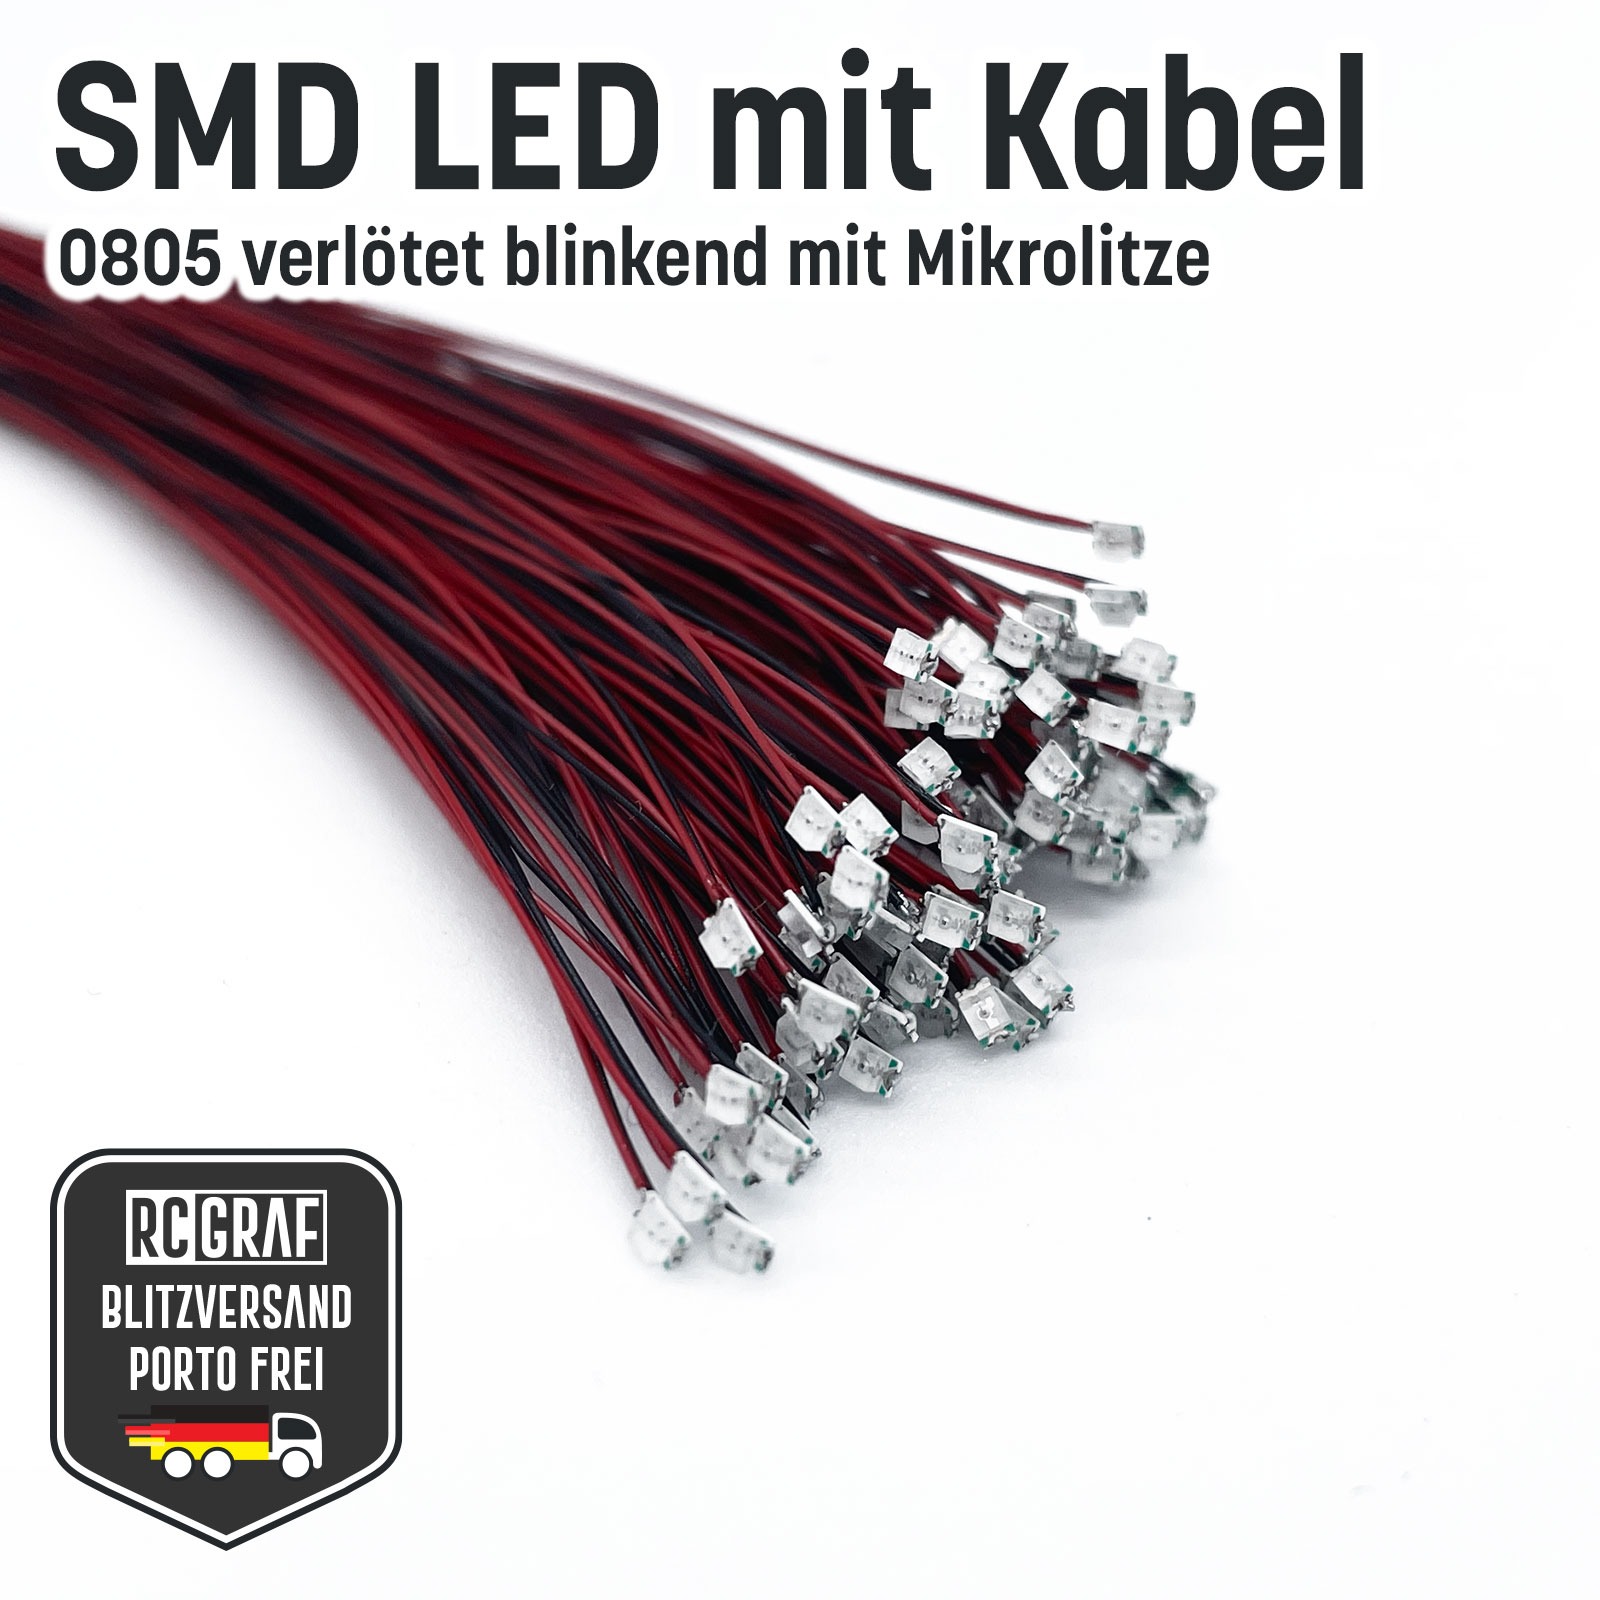 Flashing SMD LED 0805 Microlitz 30cm soldered